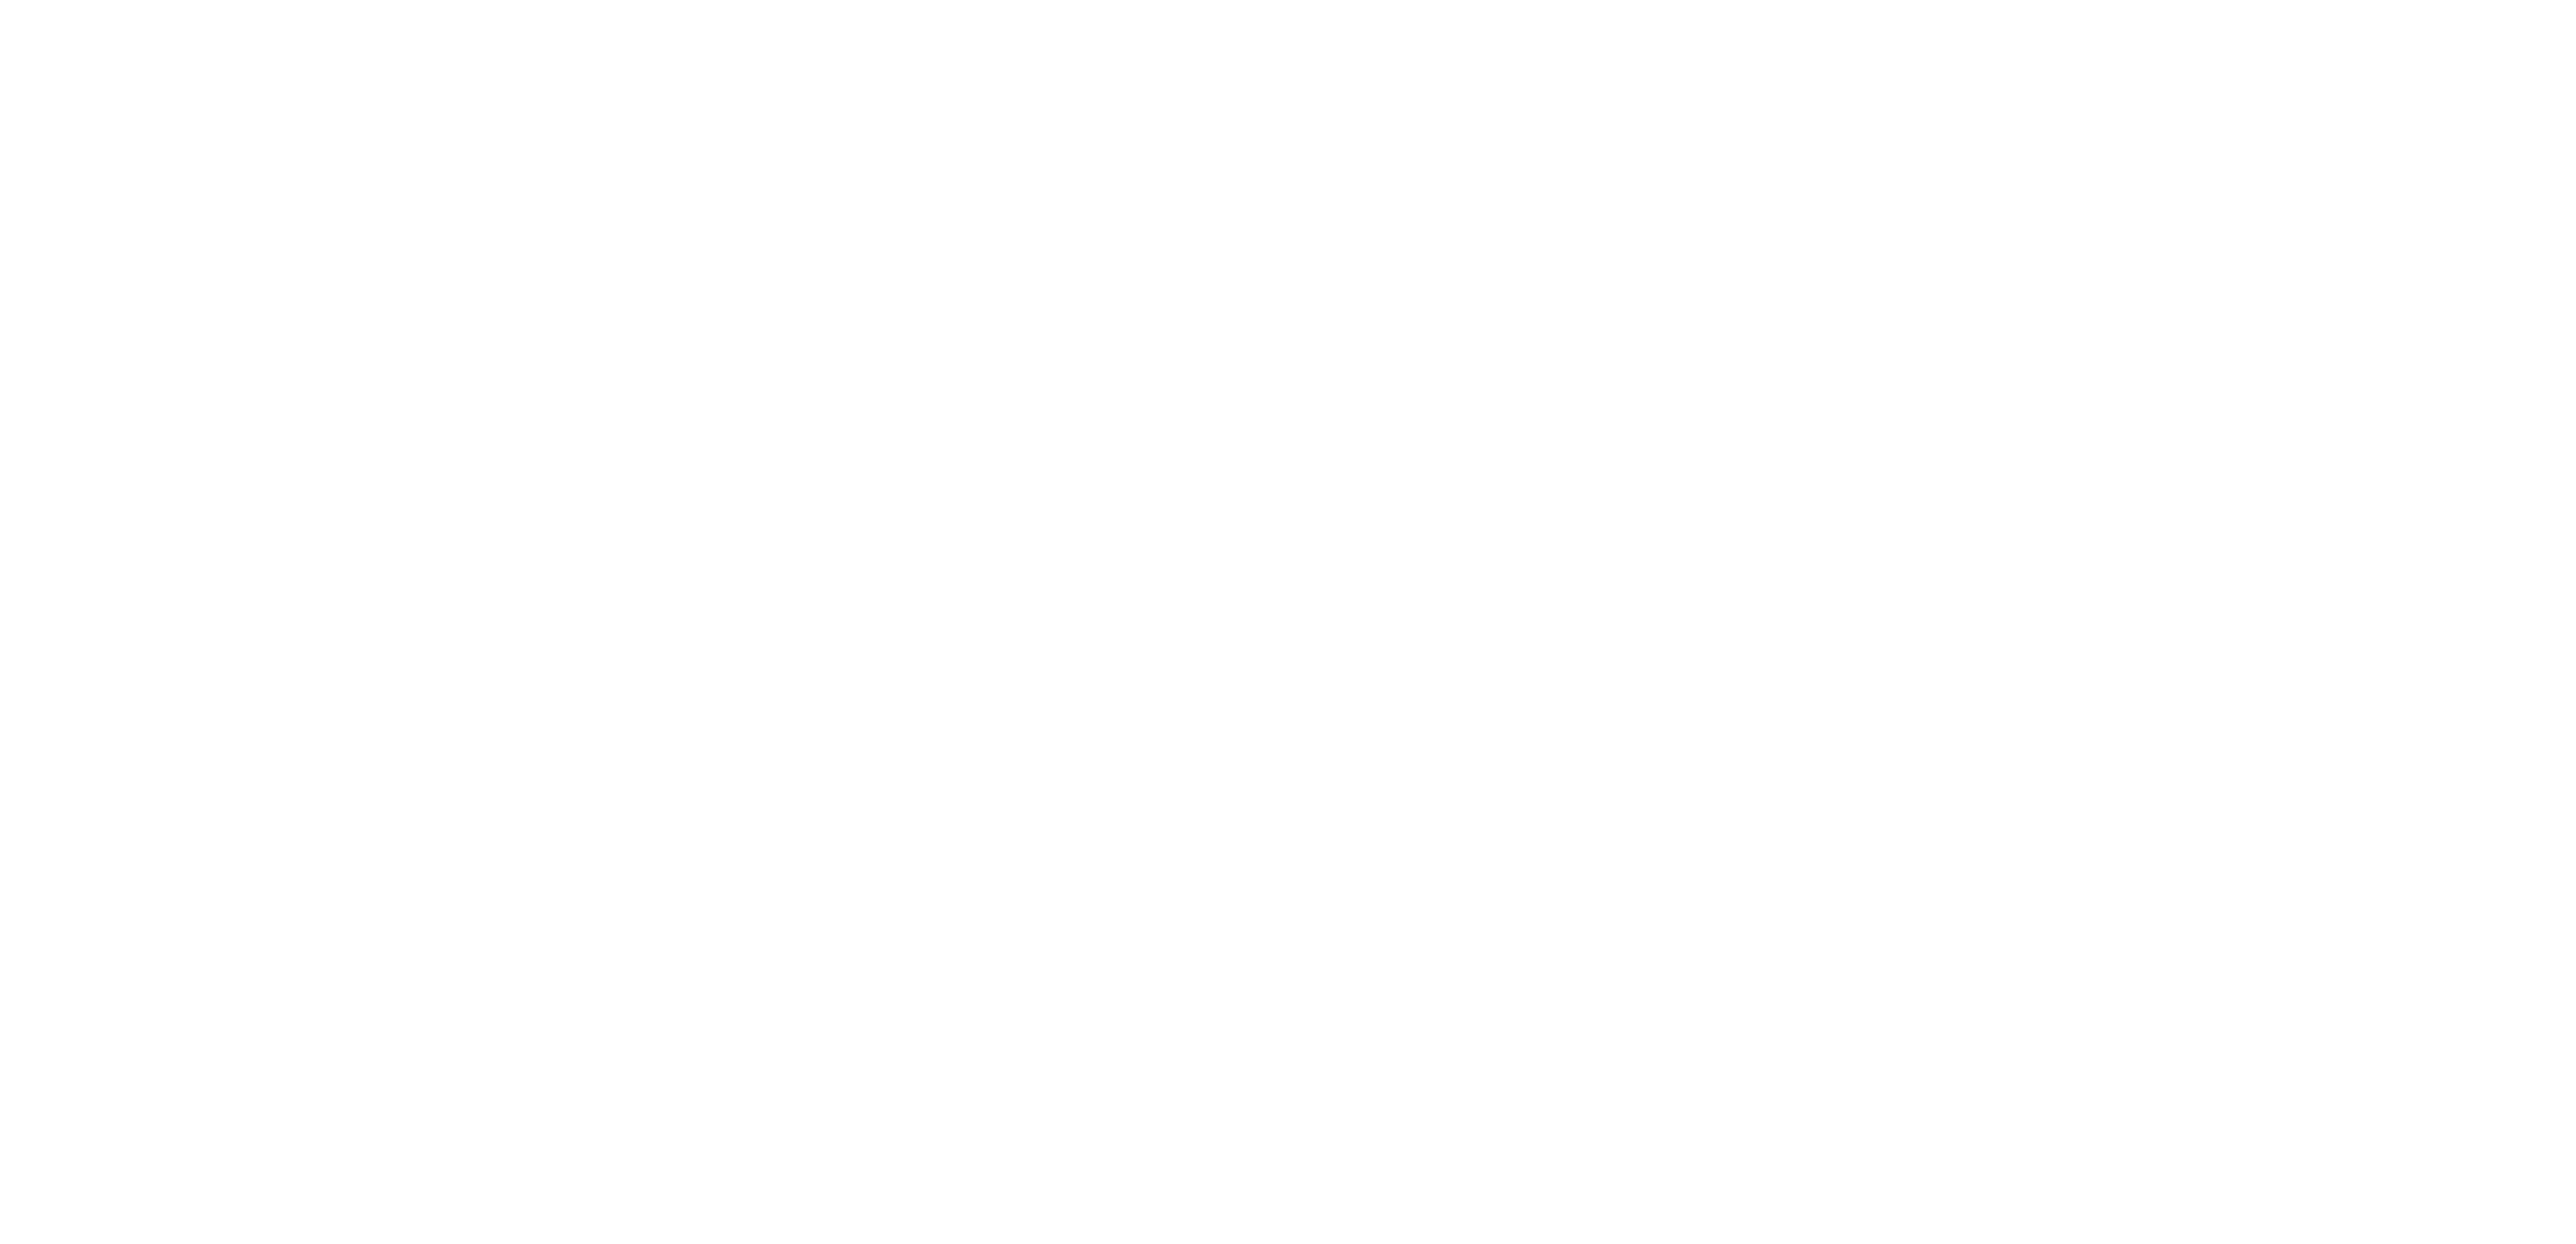 KLOS Investment